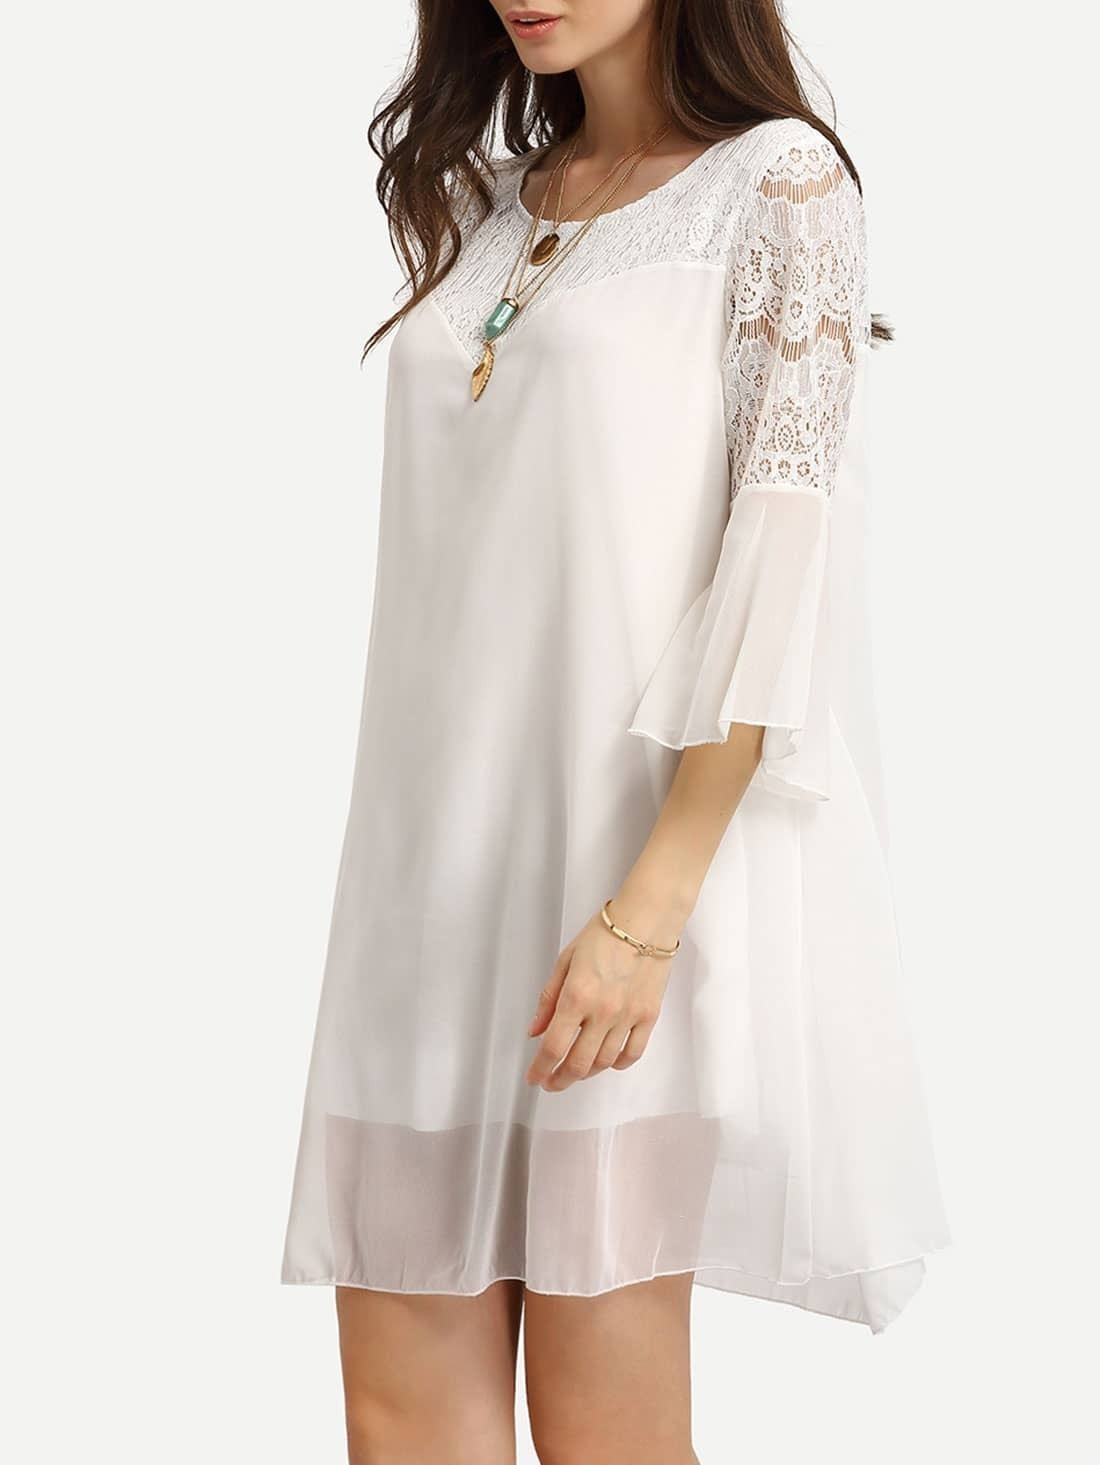 White lace insert chiffon teddy dress - Womens Clothing Apparel - Shop ...